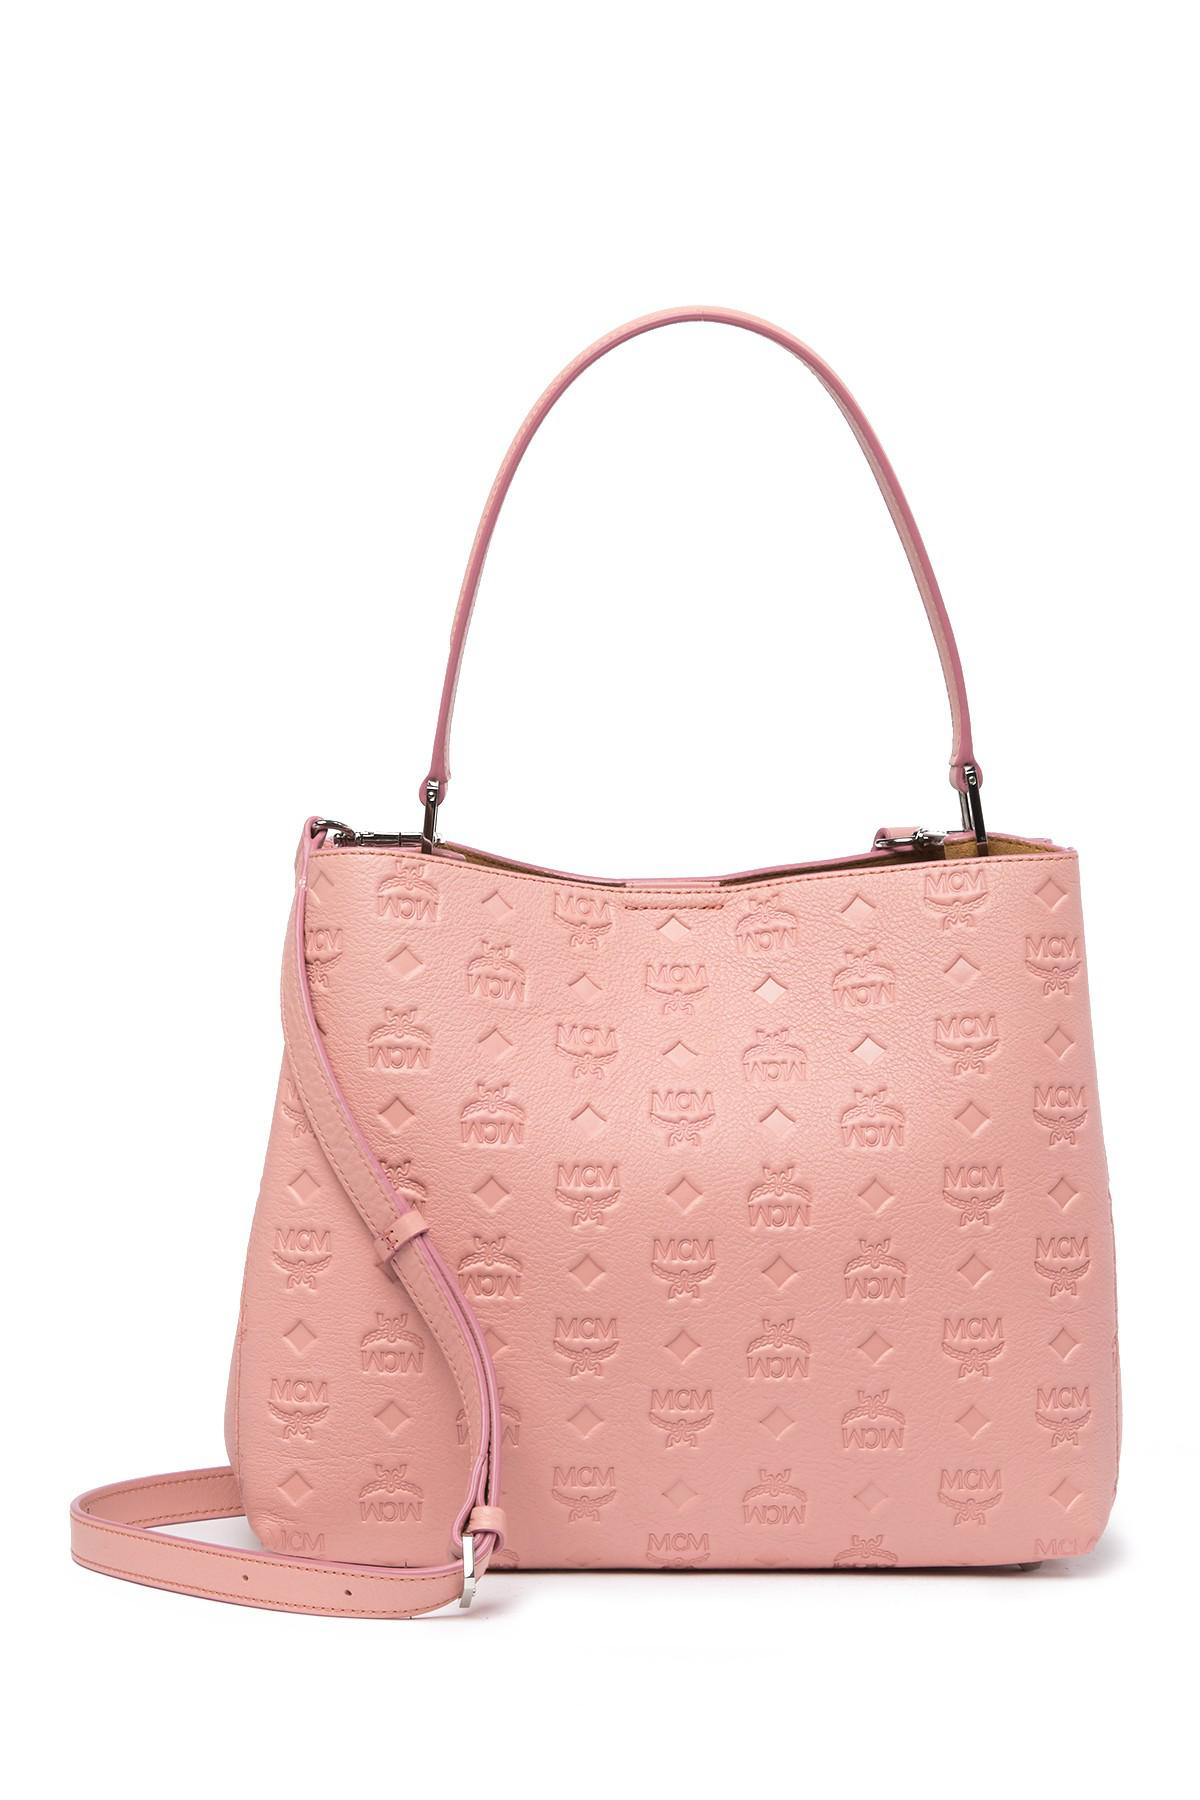 MCM Sarah Monogrammed Leather Hobo Bag in Pink | Lyst